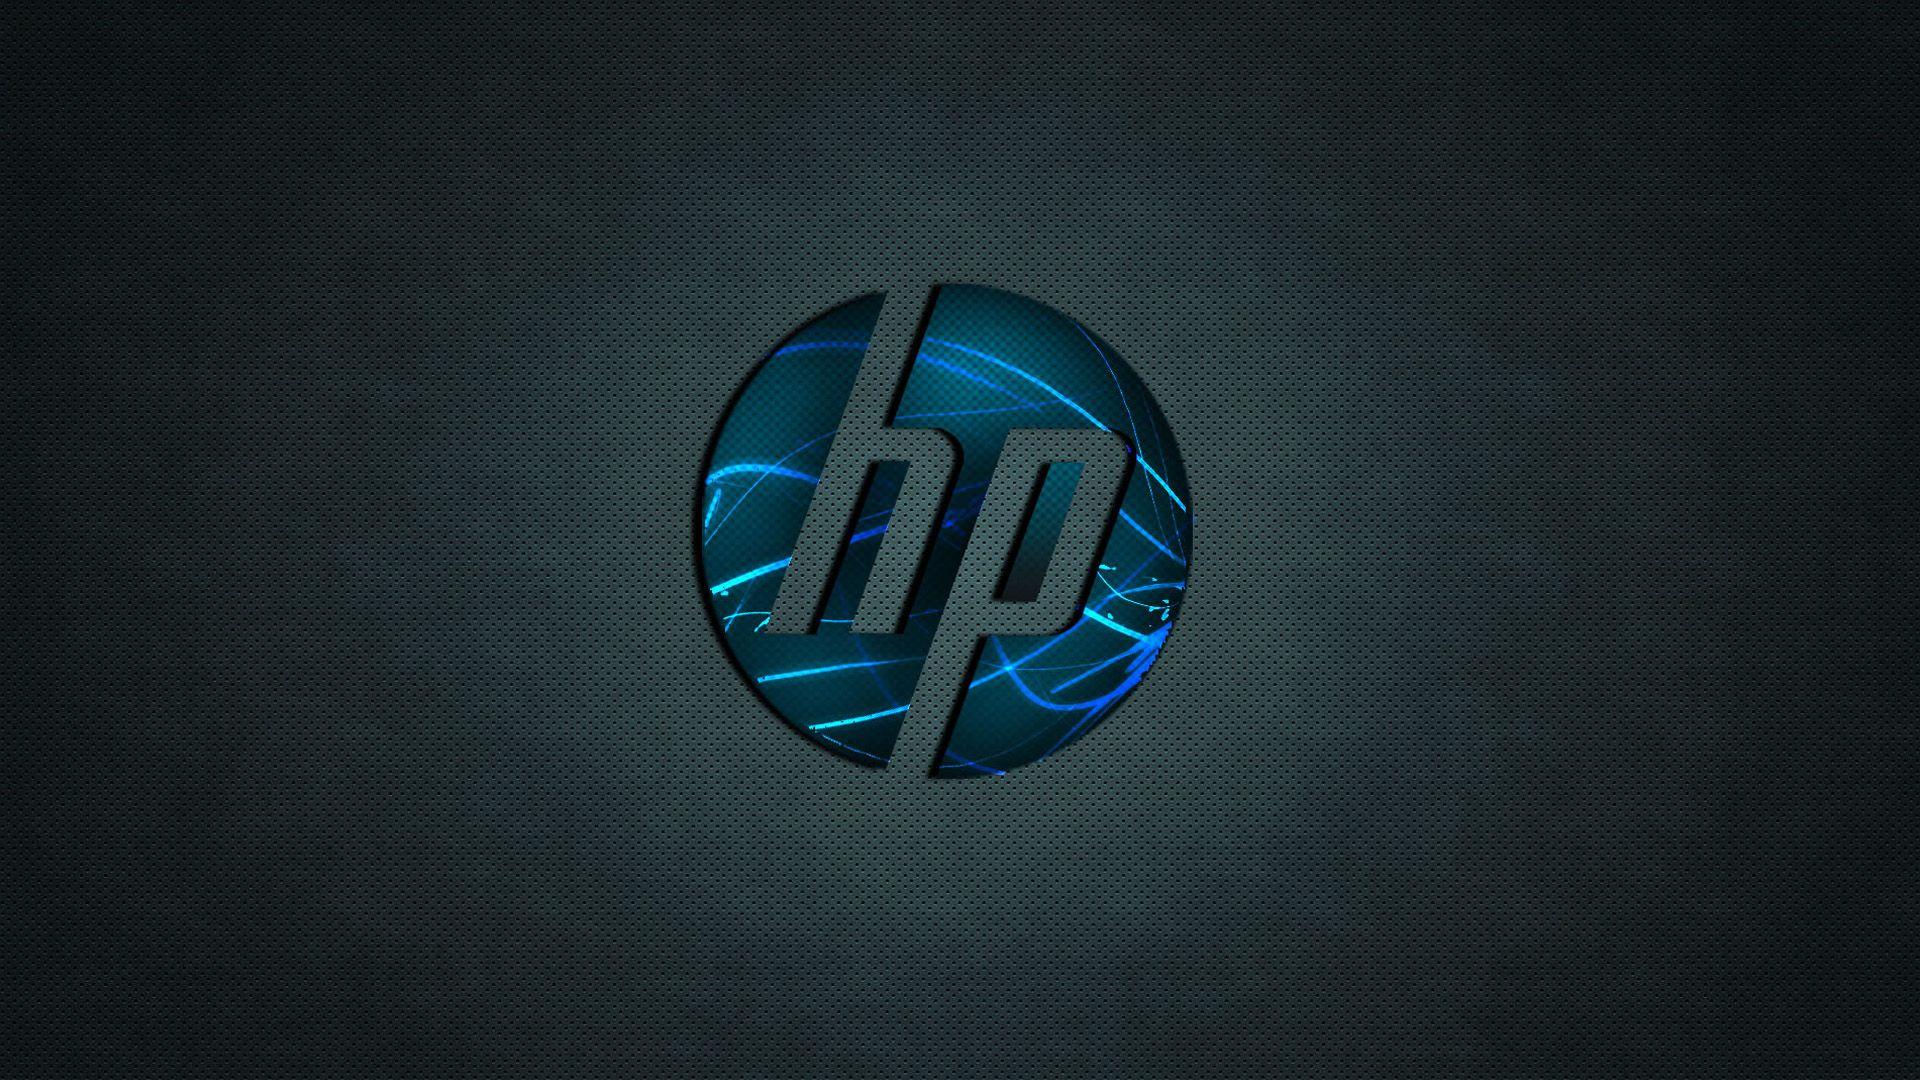  HP  4K  Ultra HD  Wallpapers  Top Free HP  4K  Ultra HD  